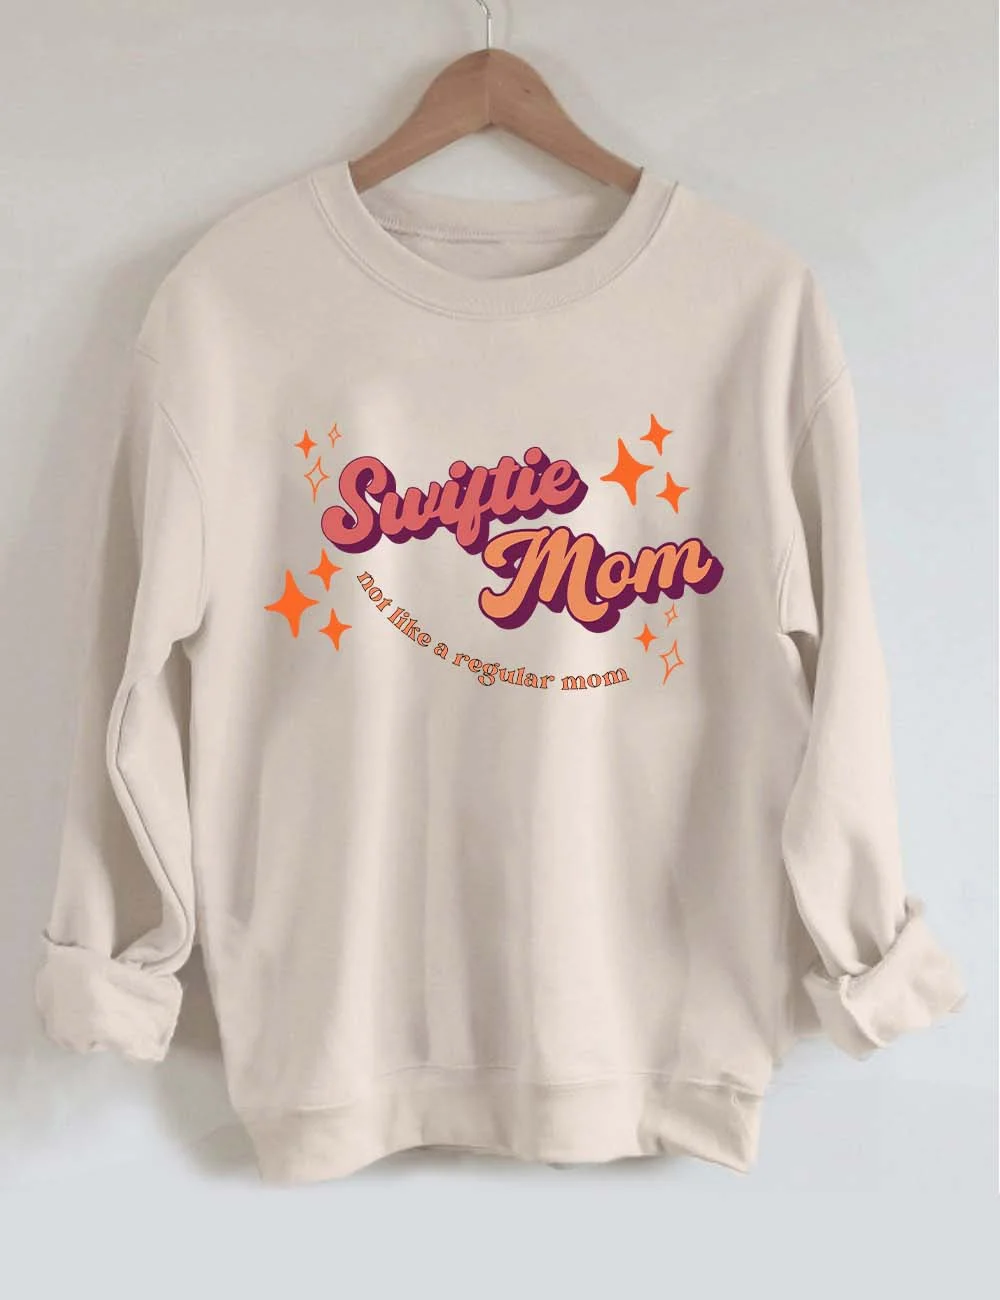 Swiftie Mom Not Like A Regular Mom Sweatshirt